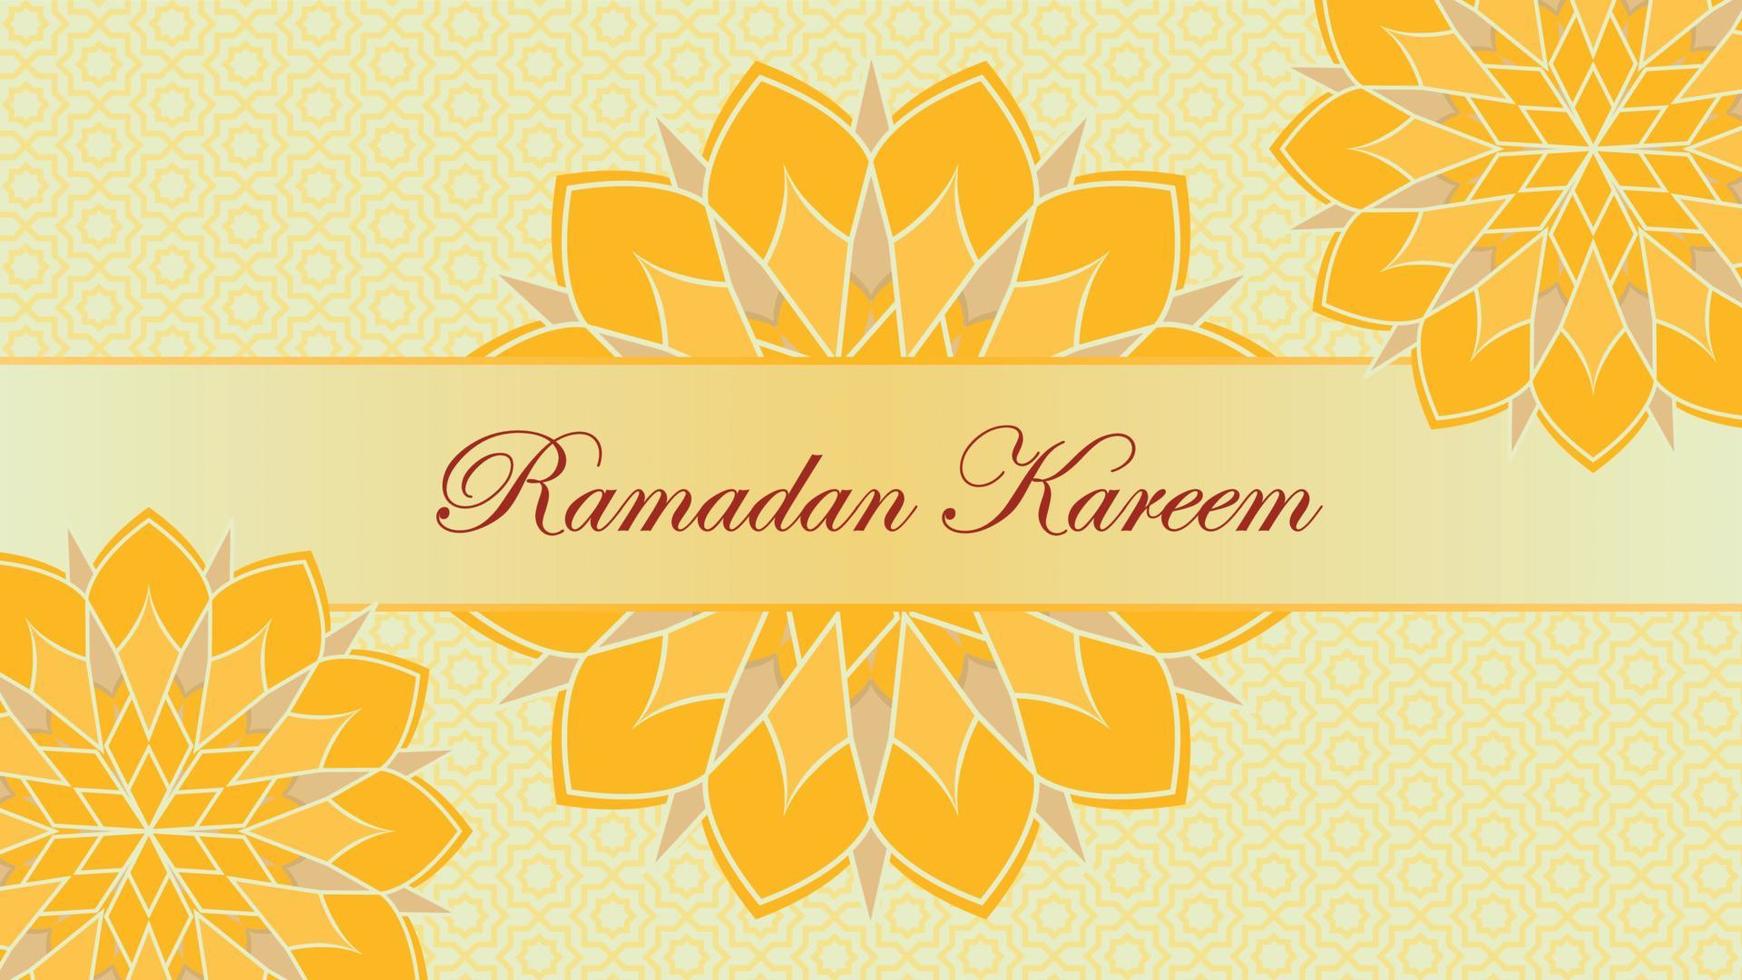 Ramadan kareem banner background template design with yellow Islamic pattern wallpaper illustration vector